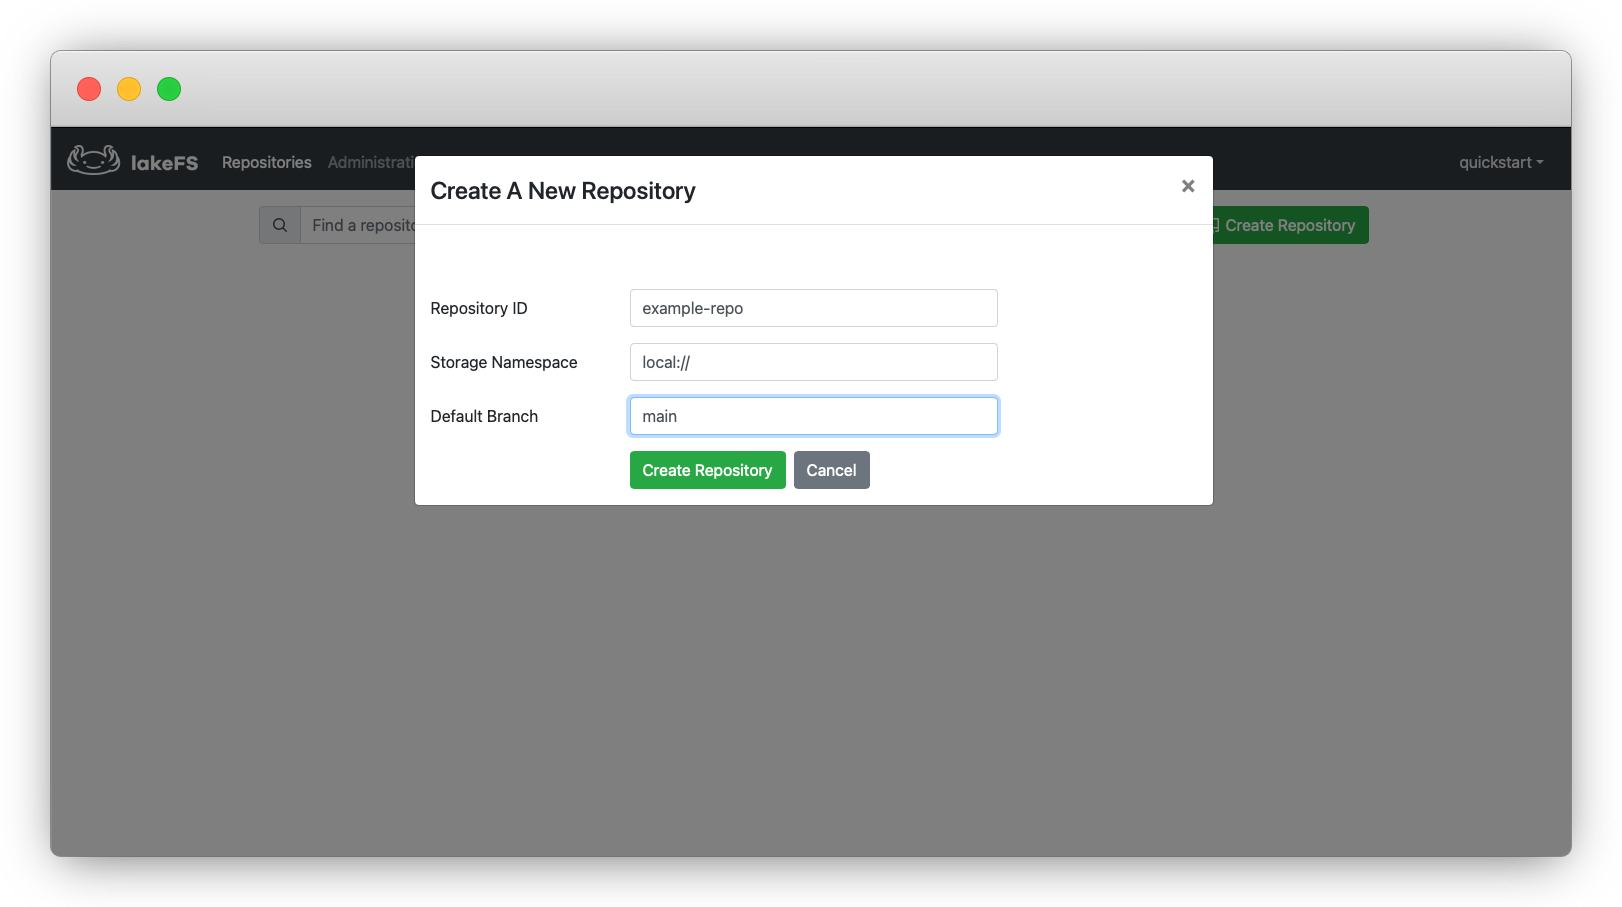 Create Repository